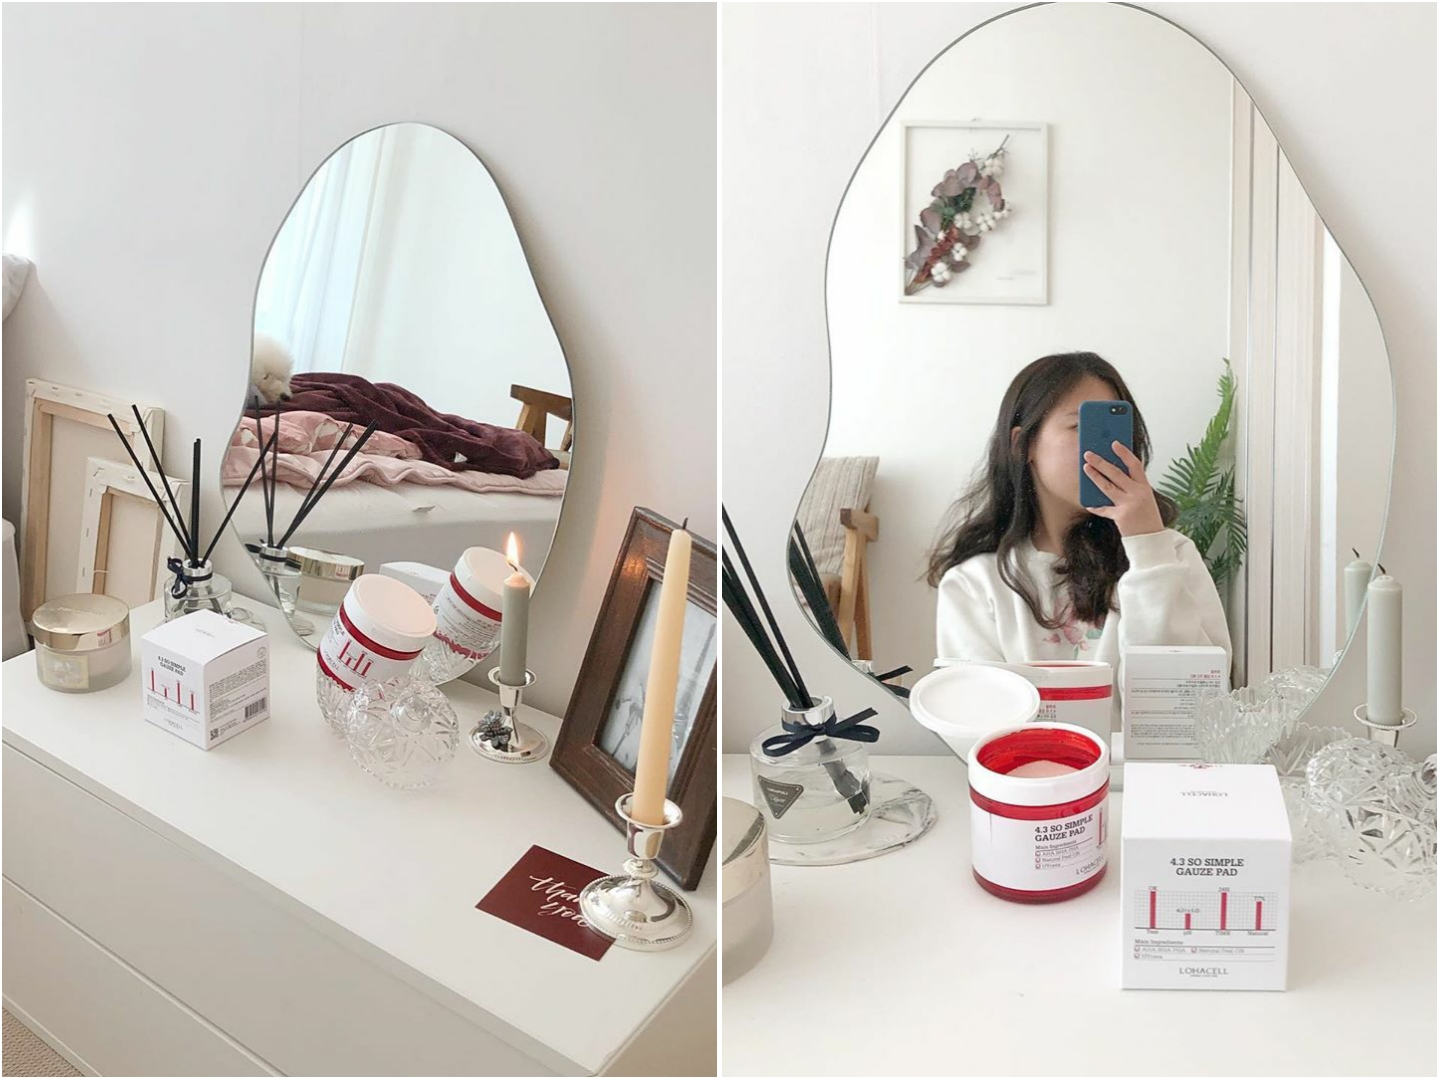 Korean Home Decor 2021 - Odd-shaped mirrors